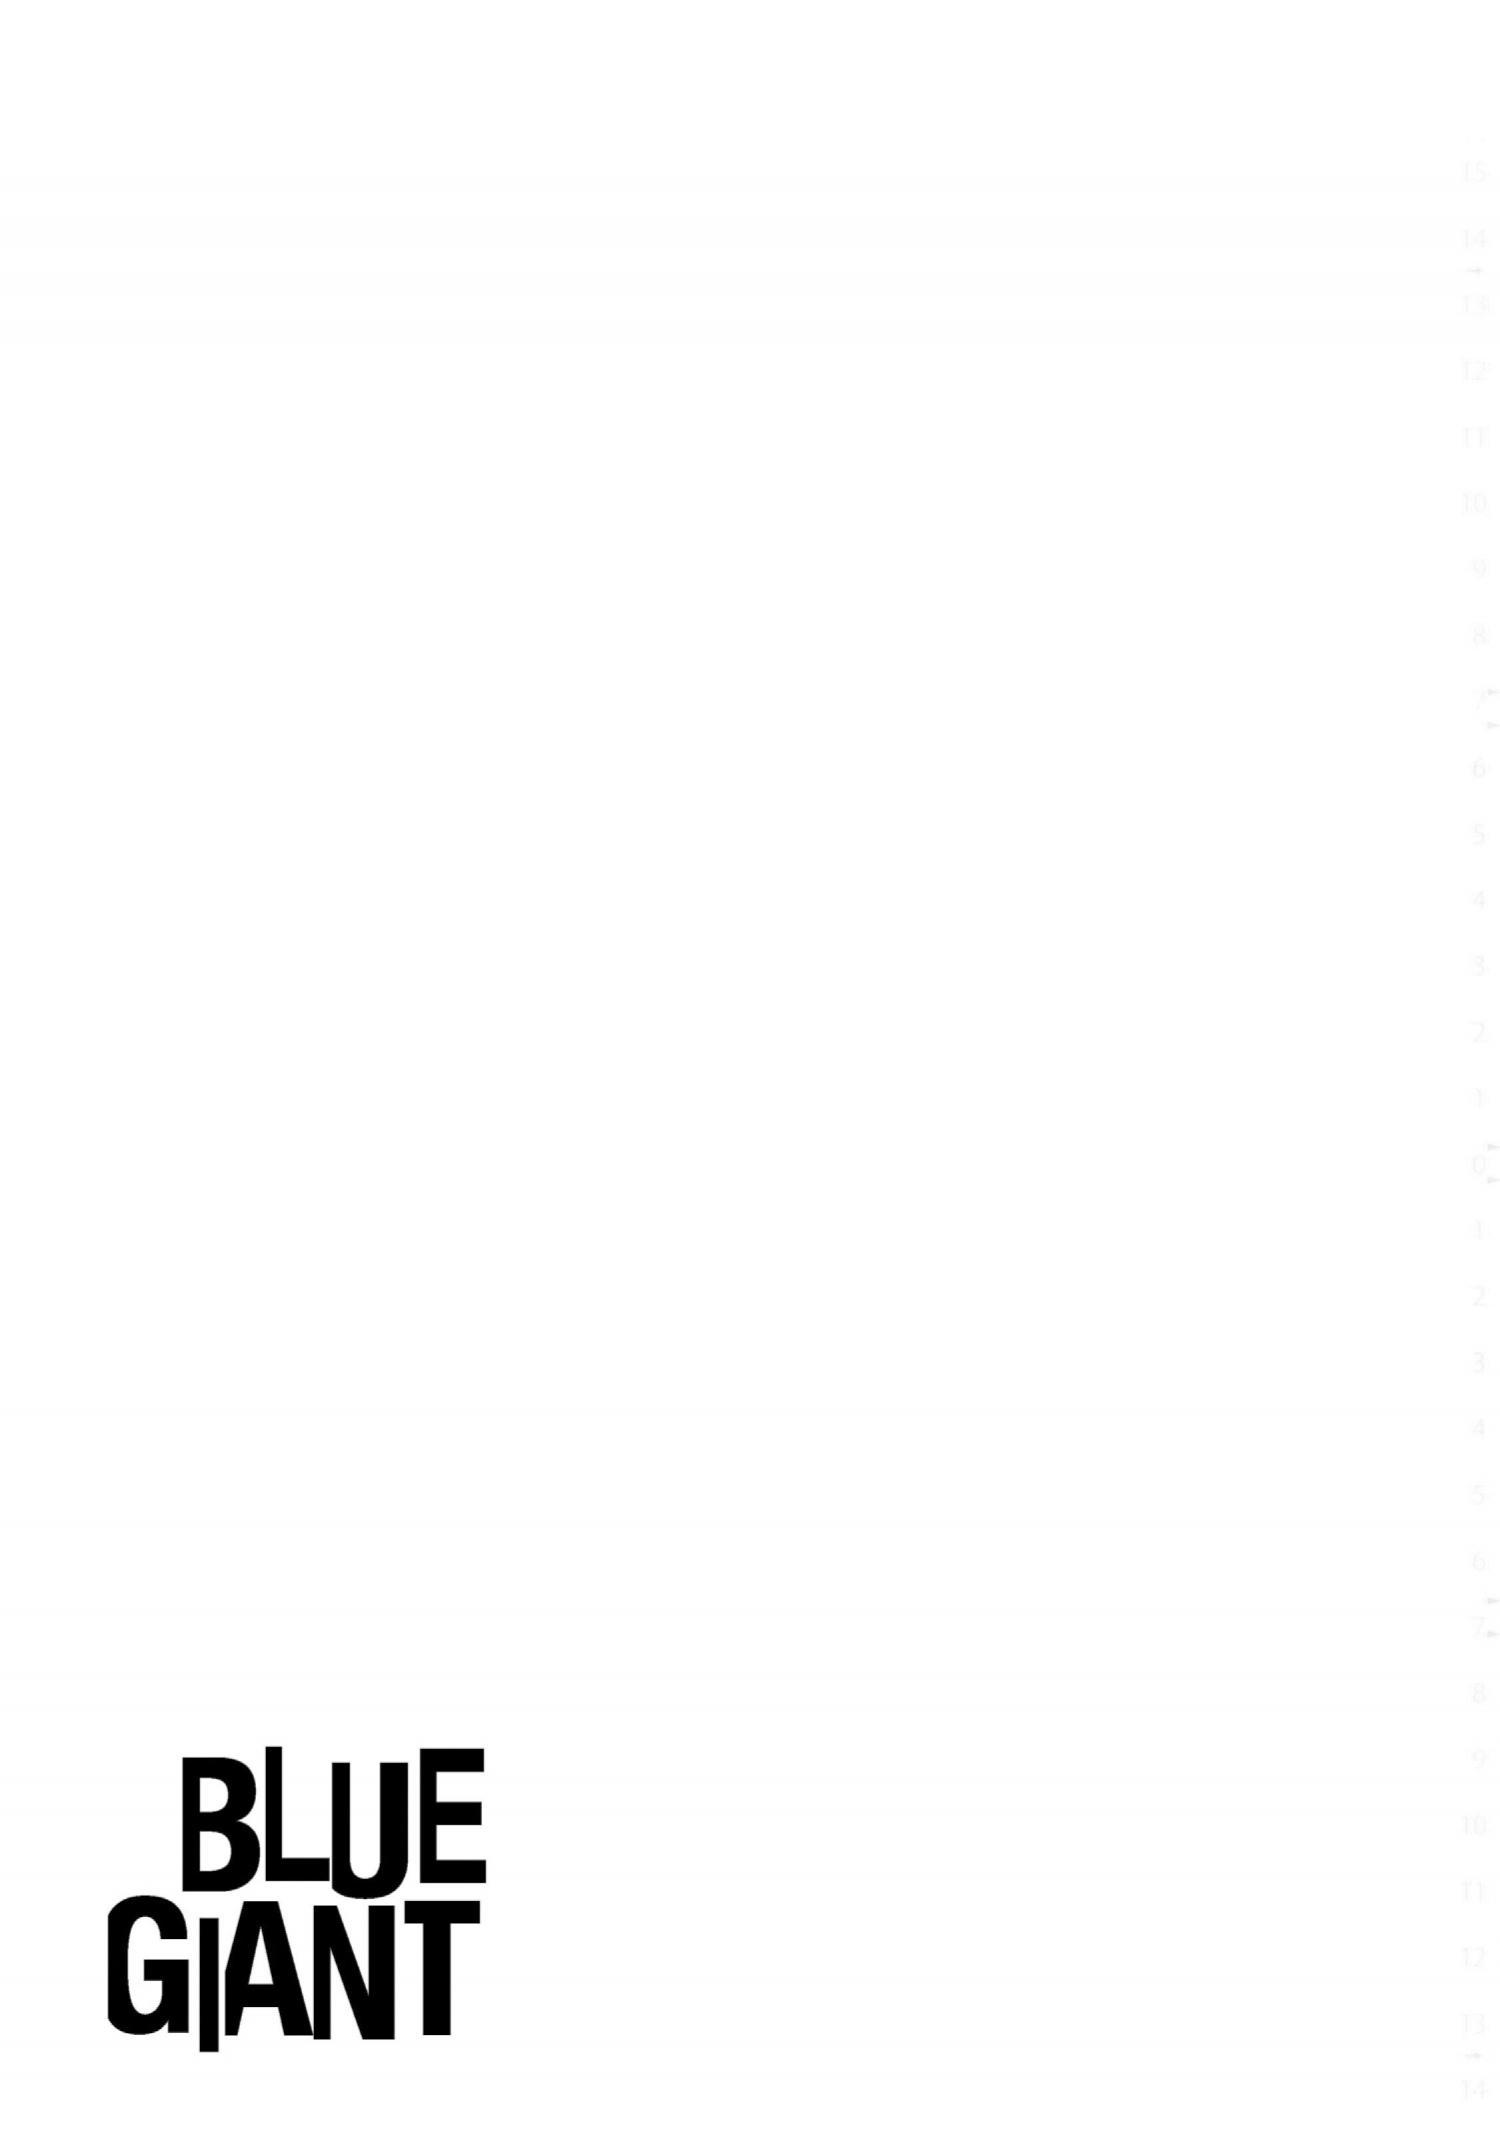 Read Blue Giant Chapter 80 on Mangakakalot